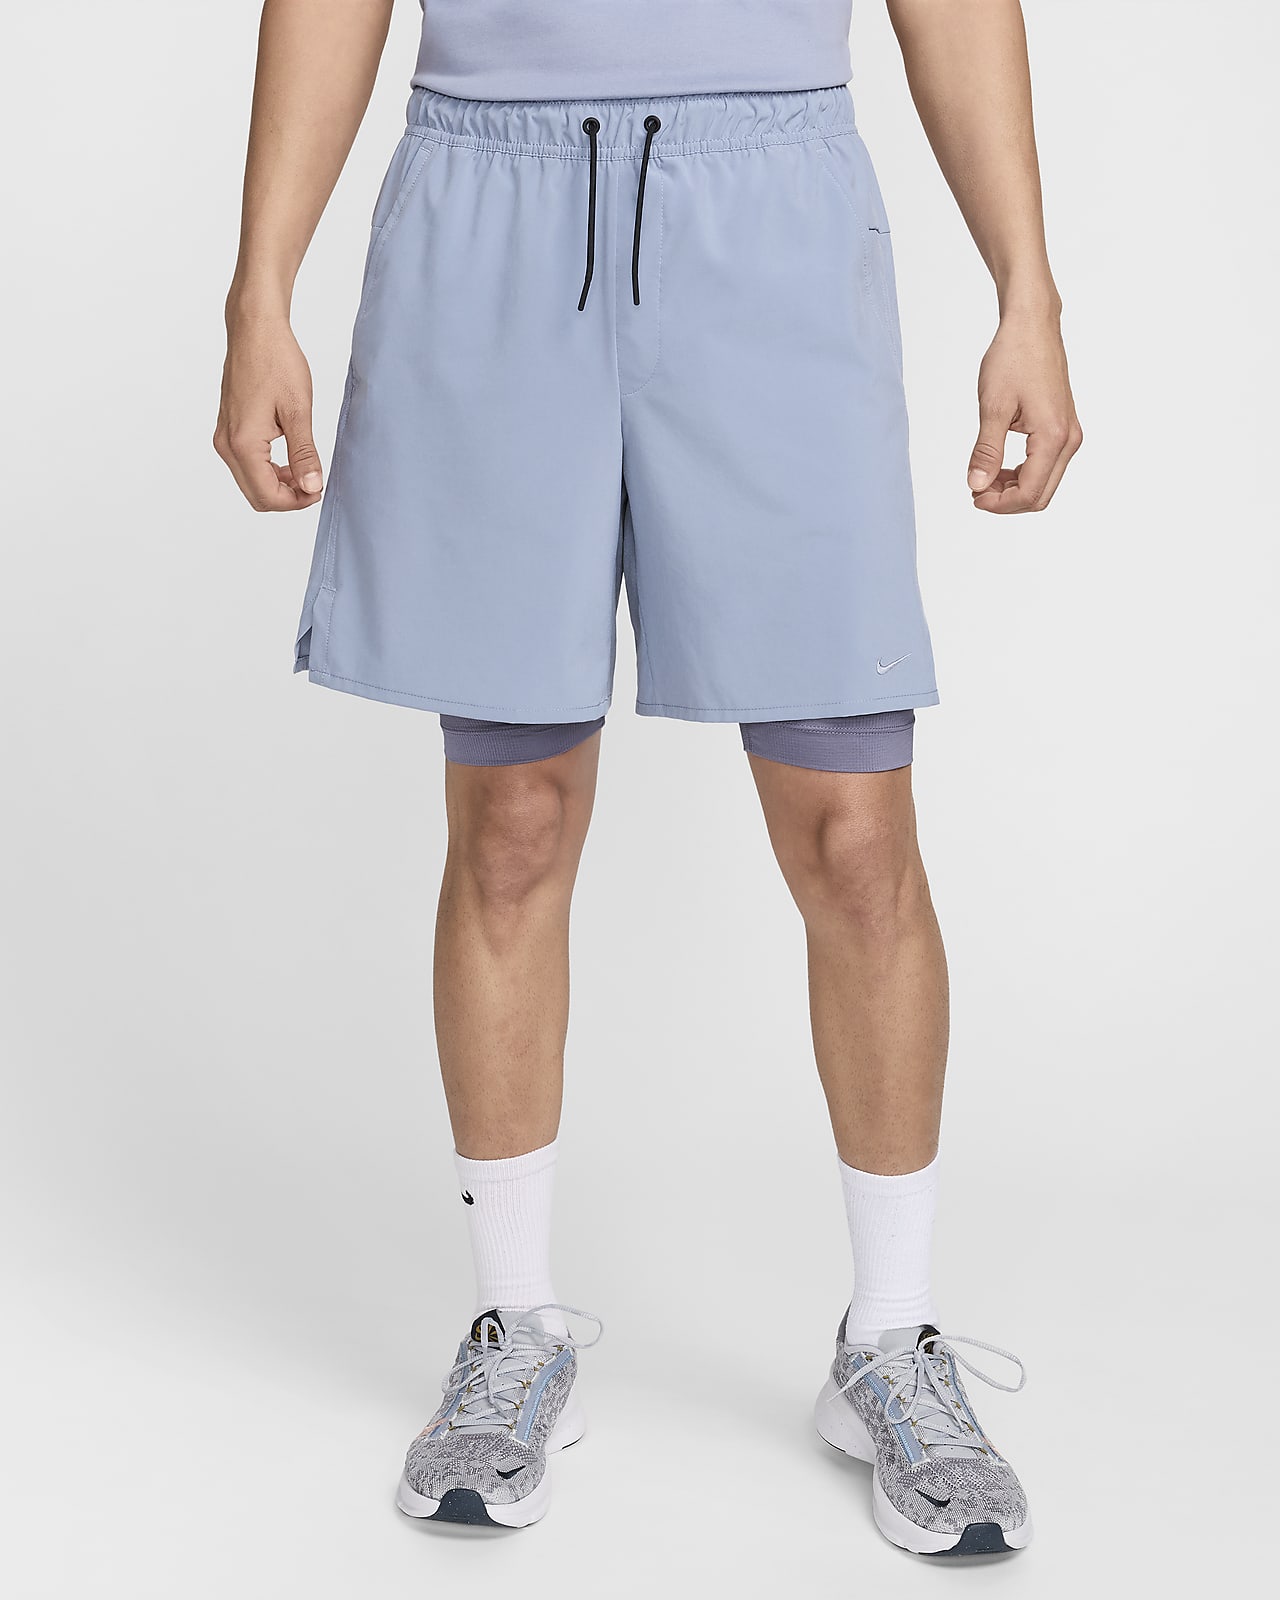 Nike Unlimited Men's Dri-FIT 7 2-in-1 Versatile Shorts